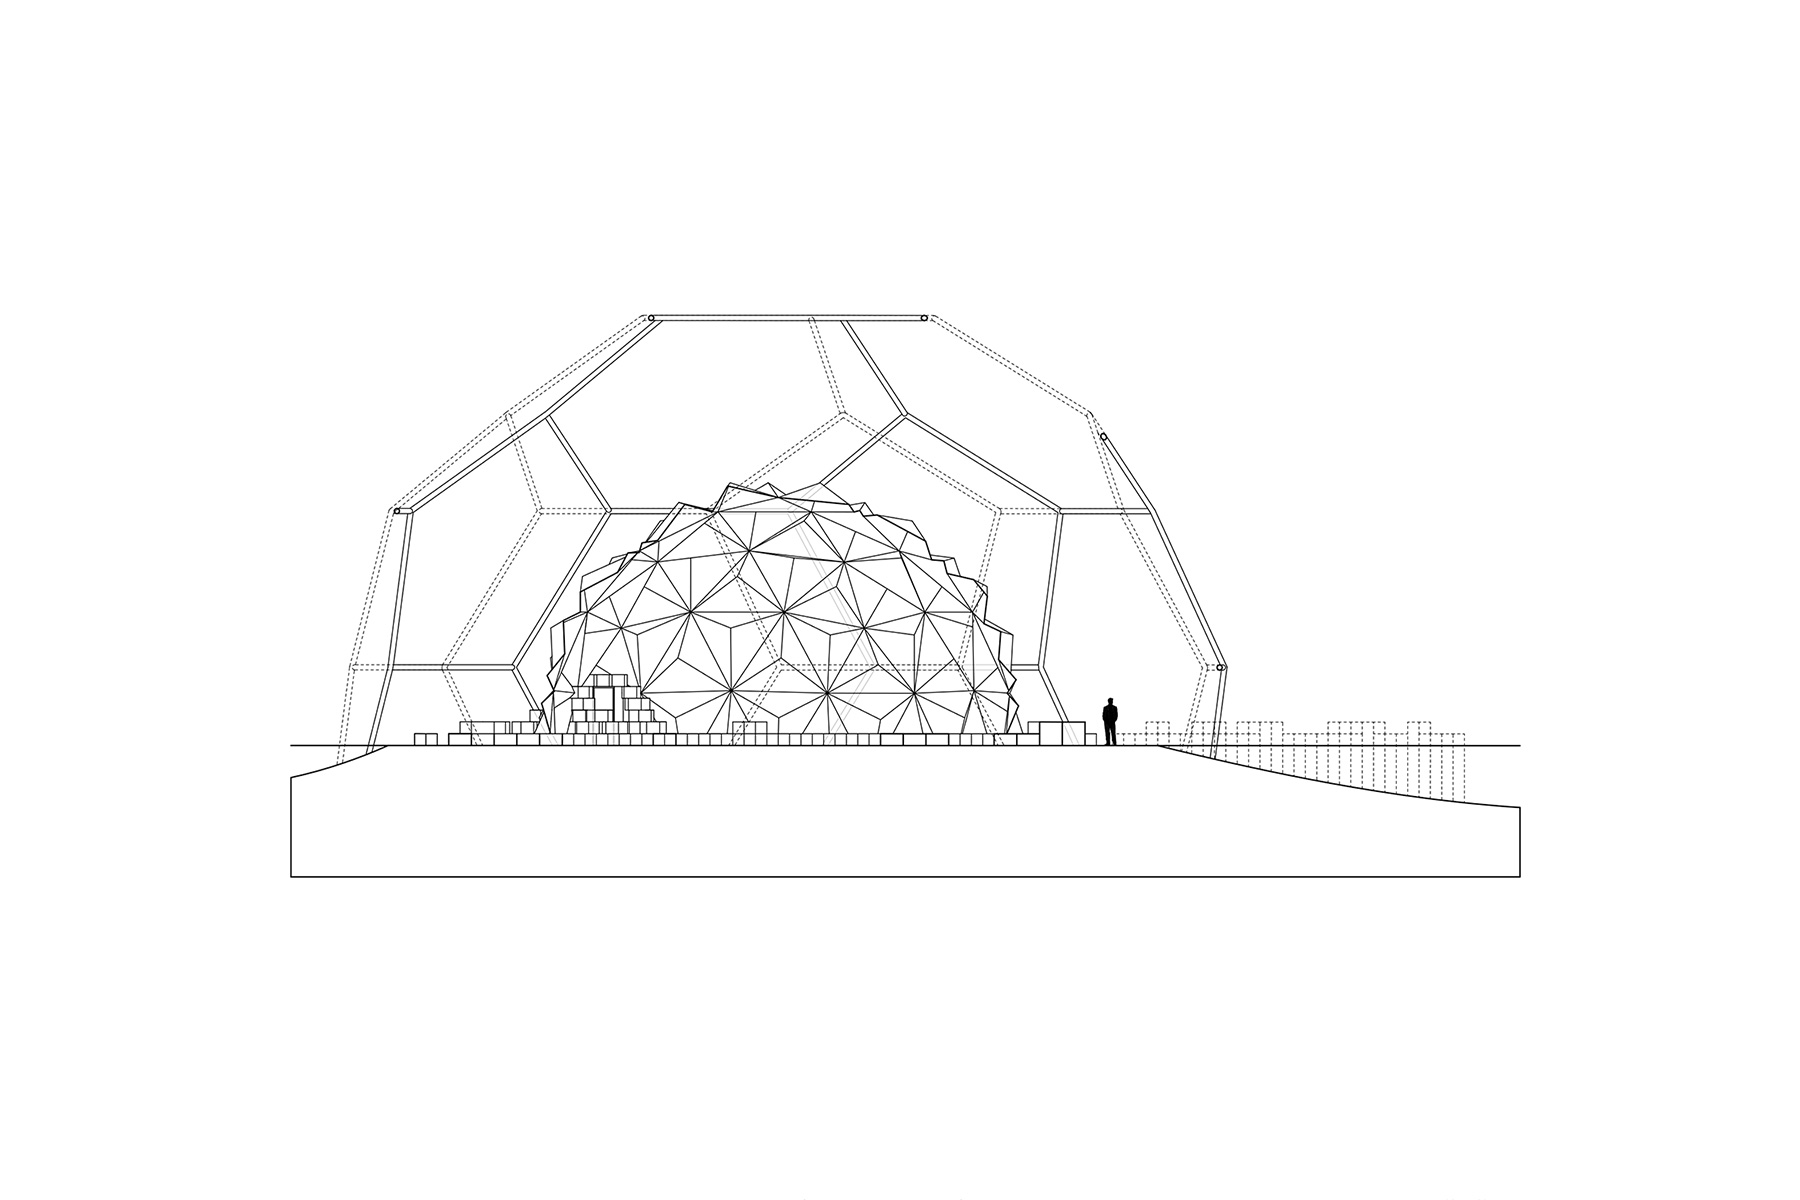 skoleprojekt skole projekt arkitekt arkitektskole aarhus eksperiment vejr natur kultur vejrfænomen skjold af frost torden pavillon mexico city prismatisk kuppel lyn faraday bur hexagon stål glas træ